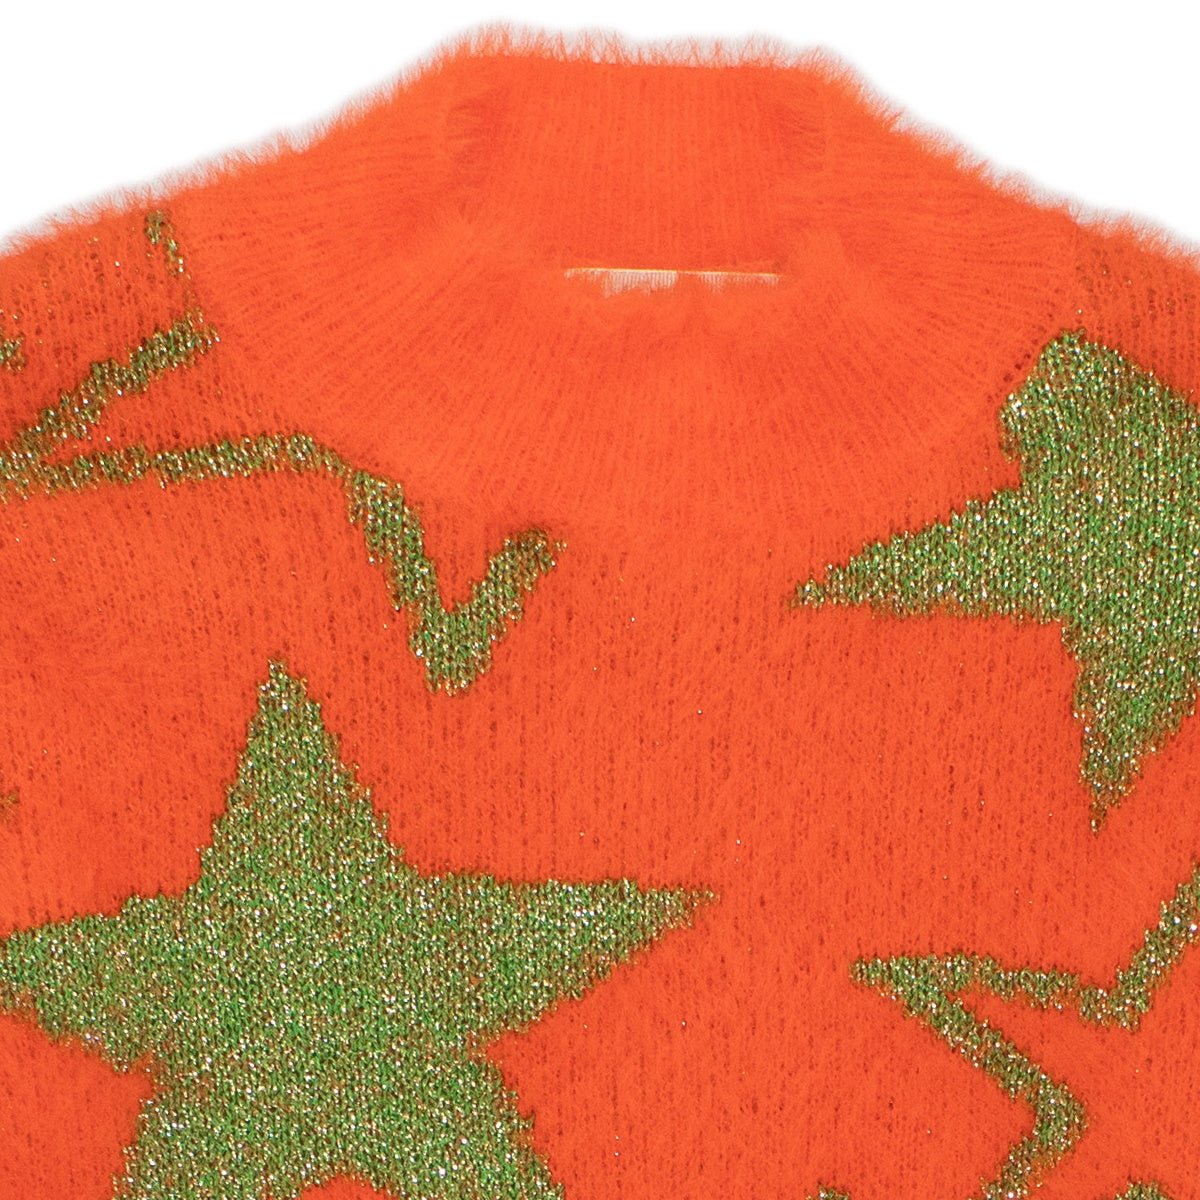 Kaos maglia ragazza viscosa arancio